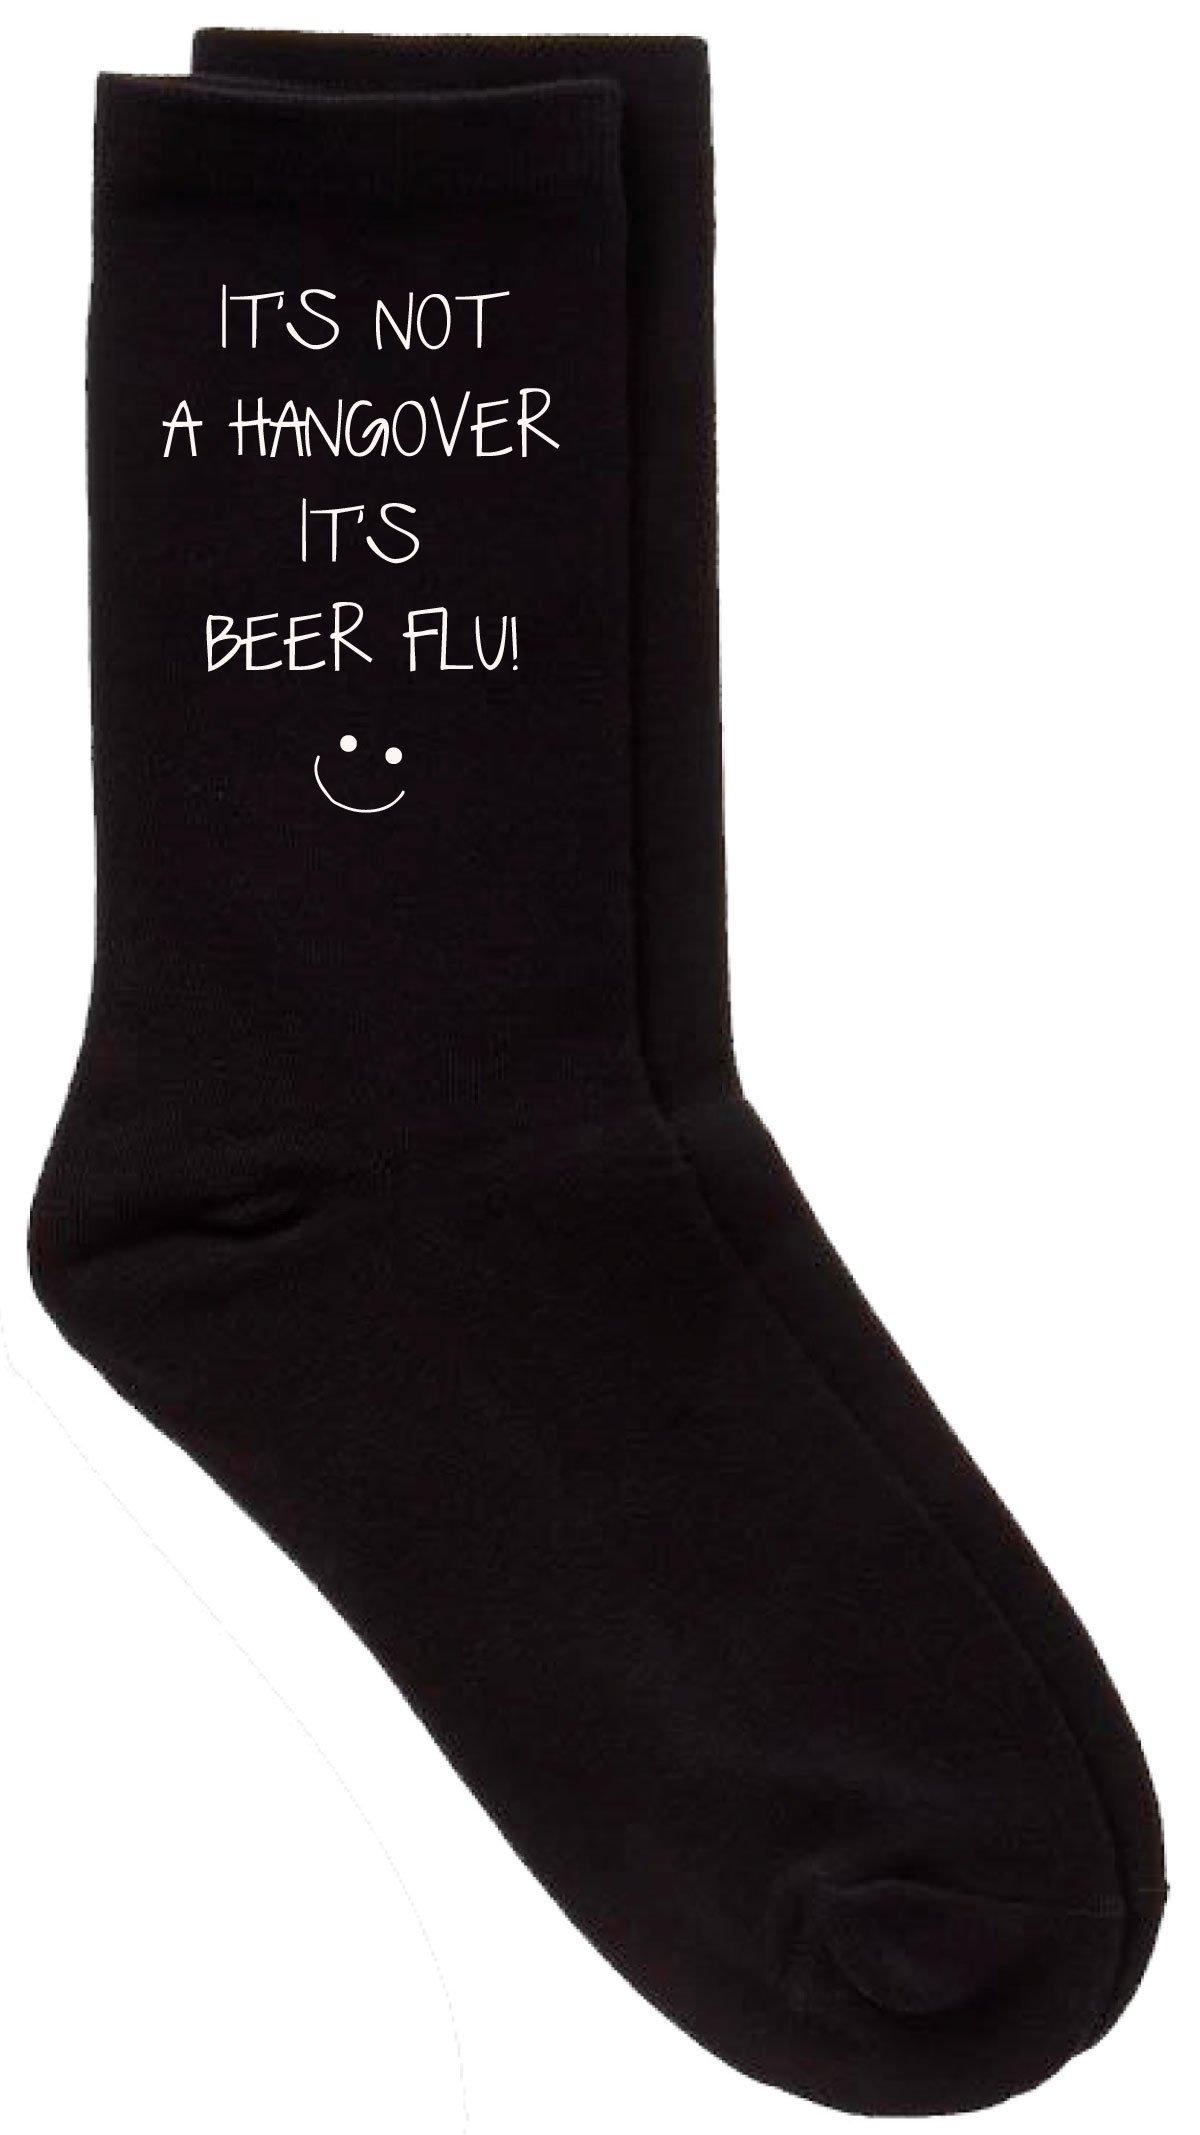 Hangover Beer Flu Black Calf Socks